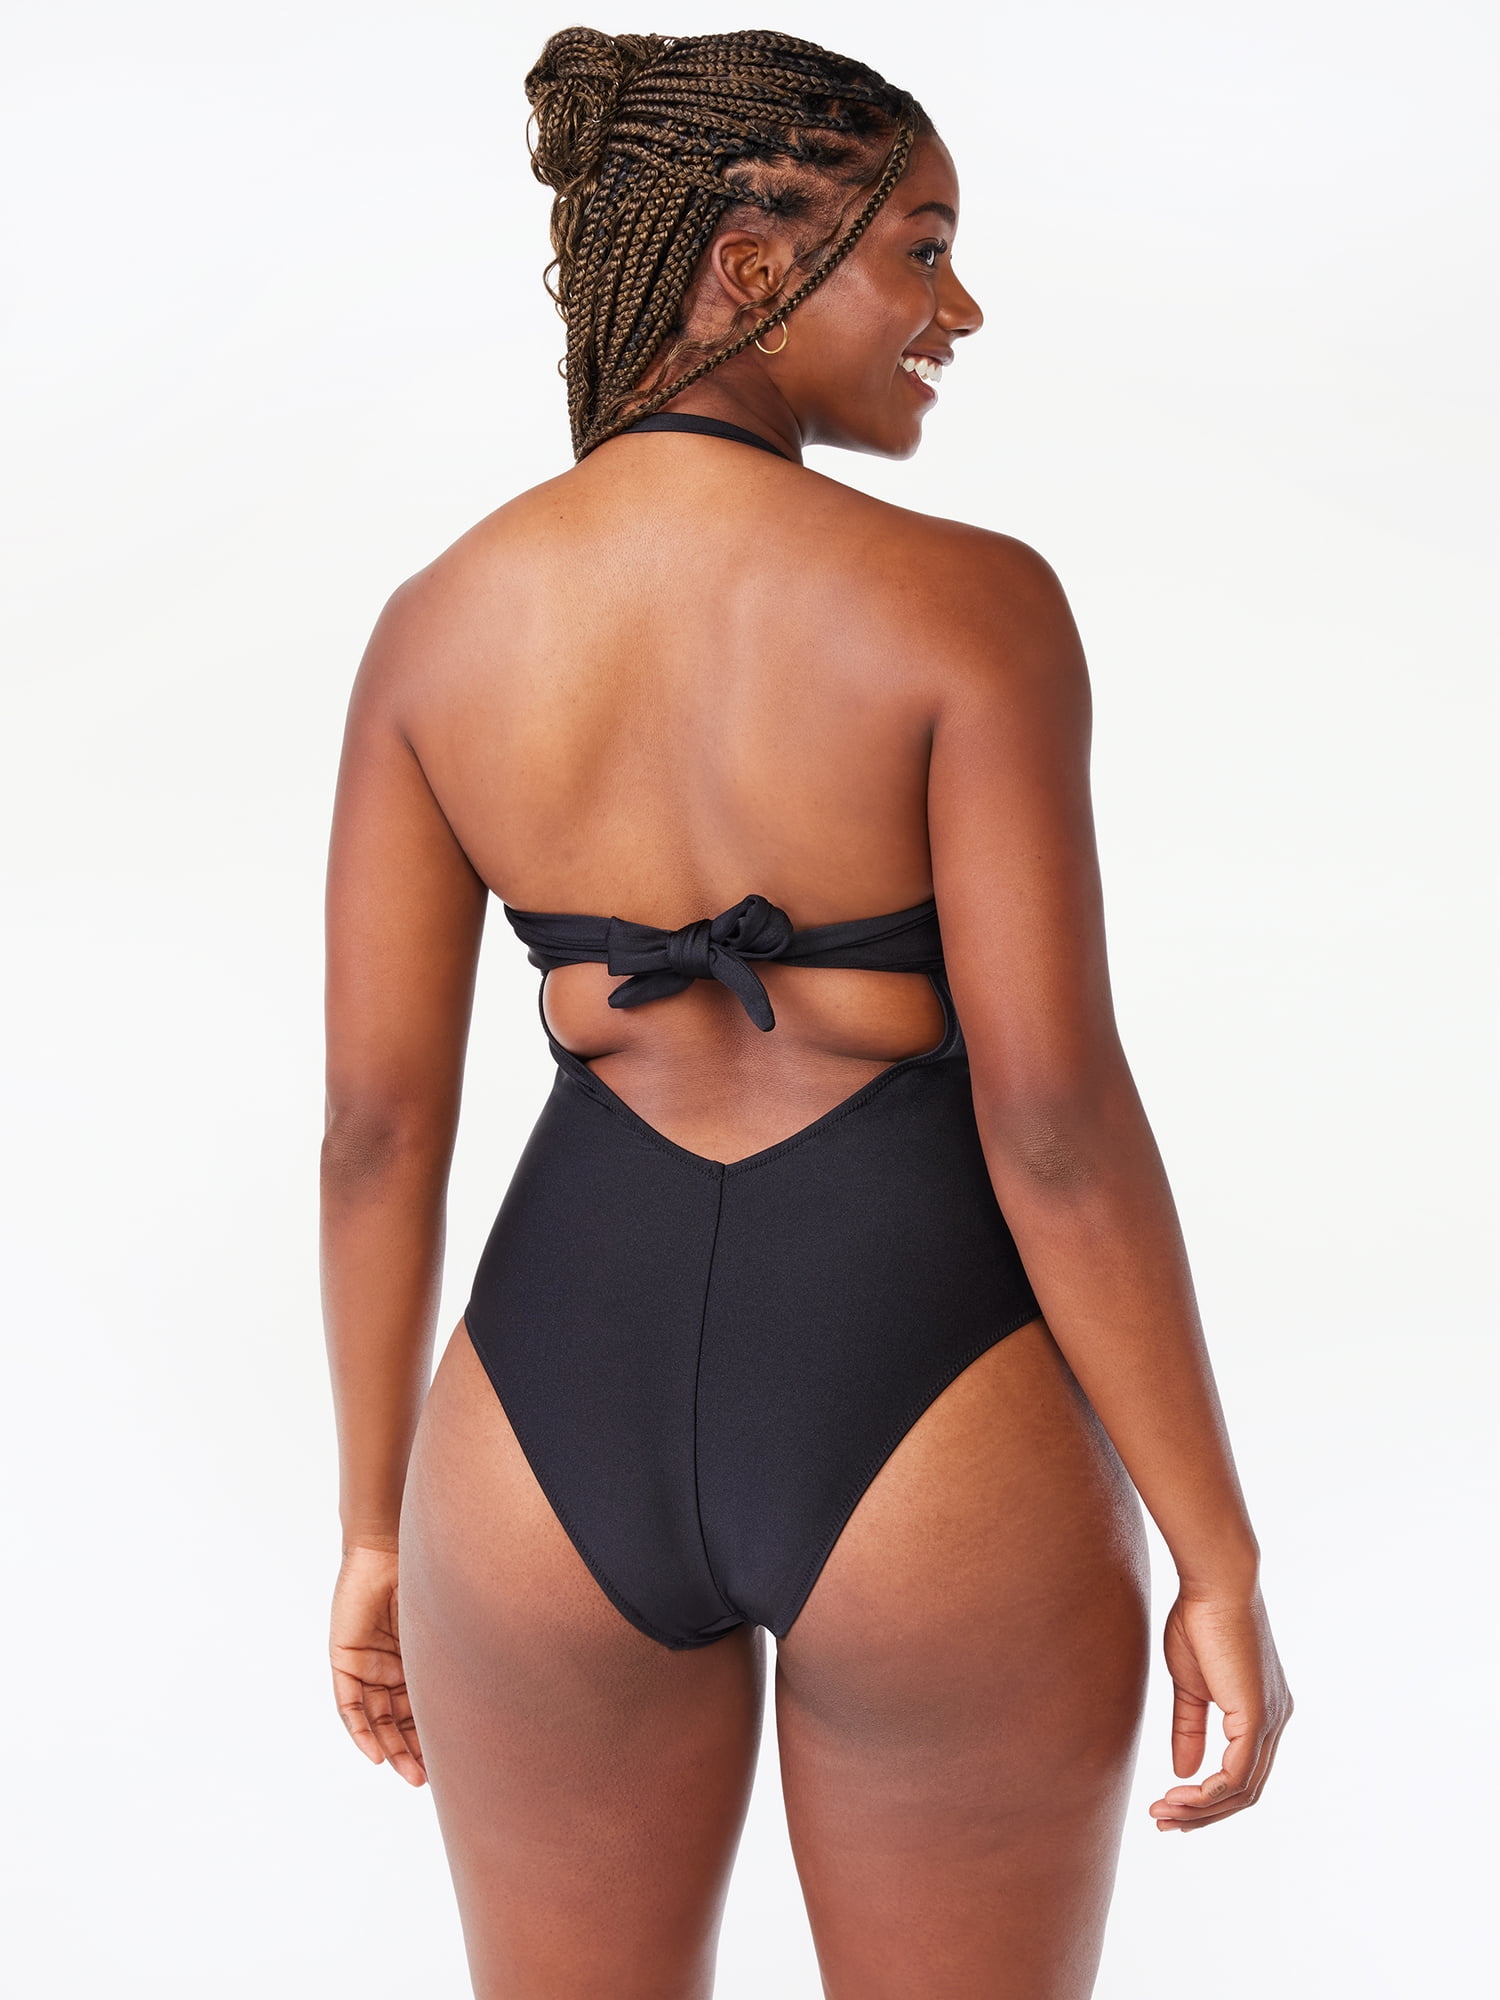 Love & Sports Women's Black Shimmer Strapless One-Piece Swimsuit, Sizes  XS-XXL